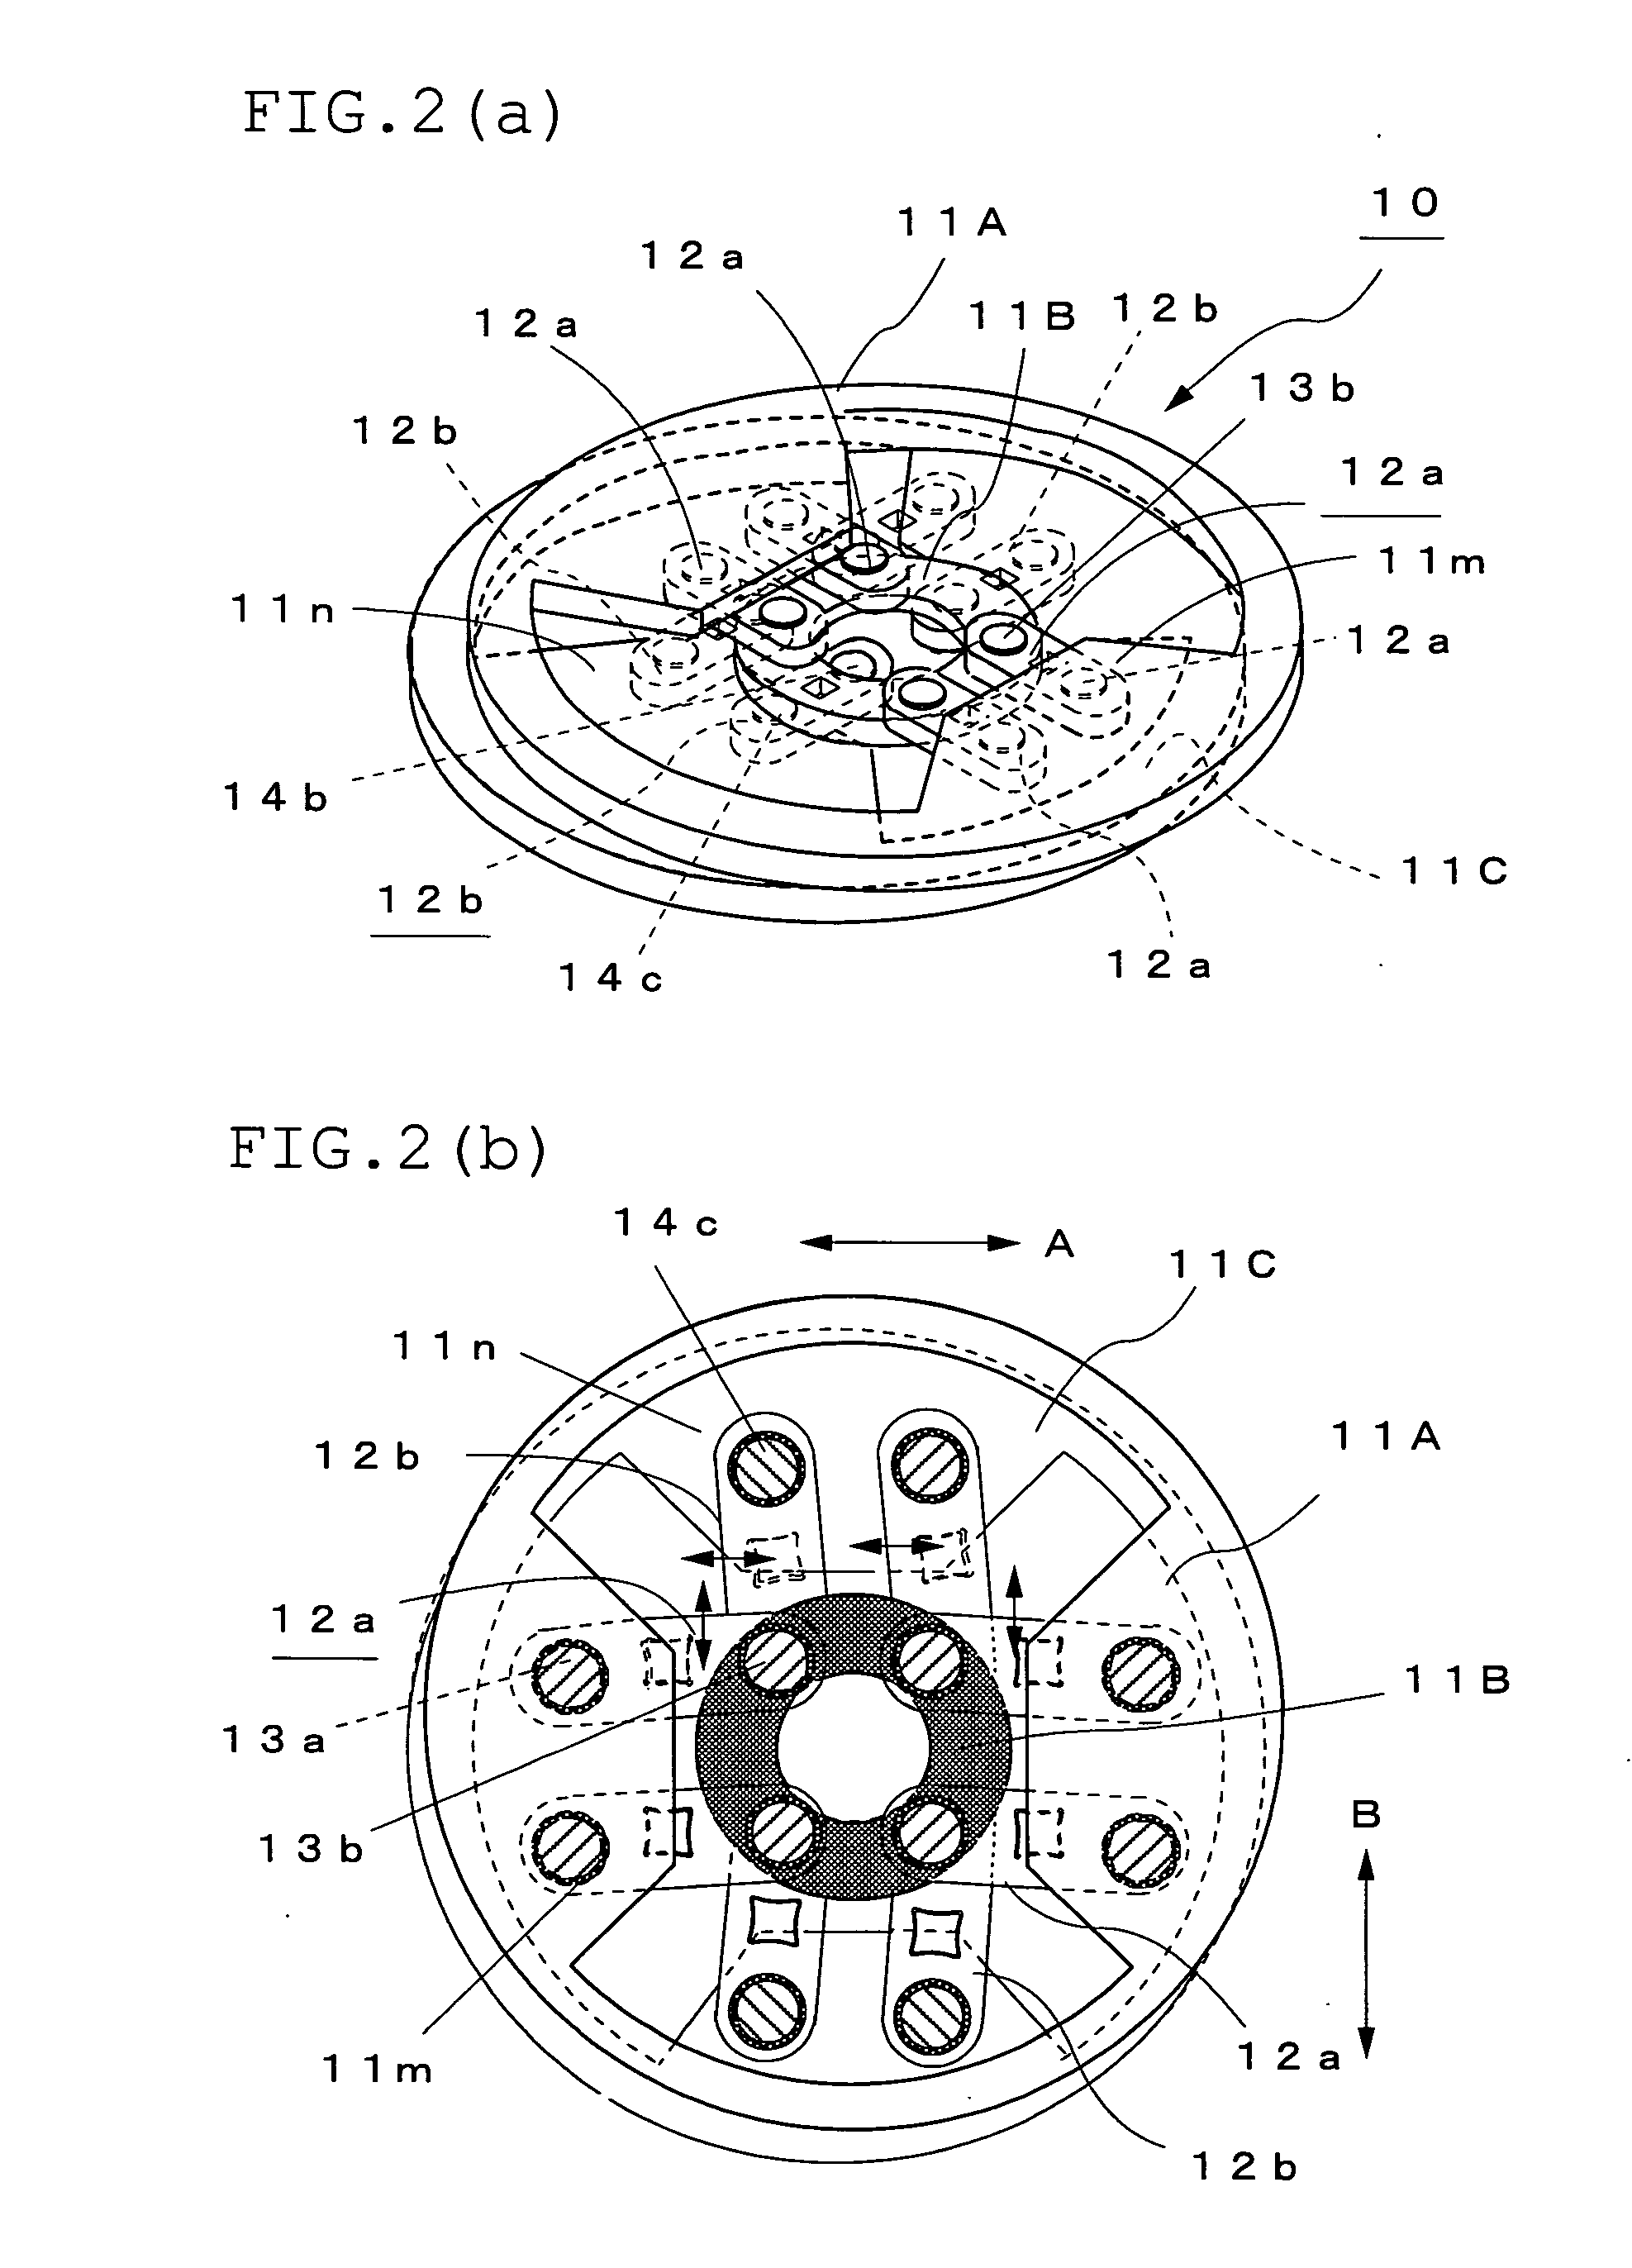 In-wheel motor system